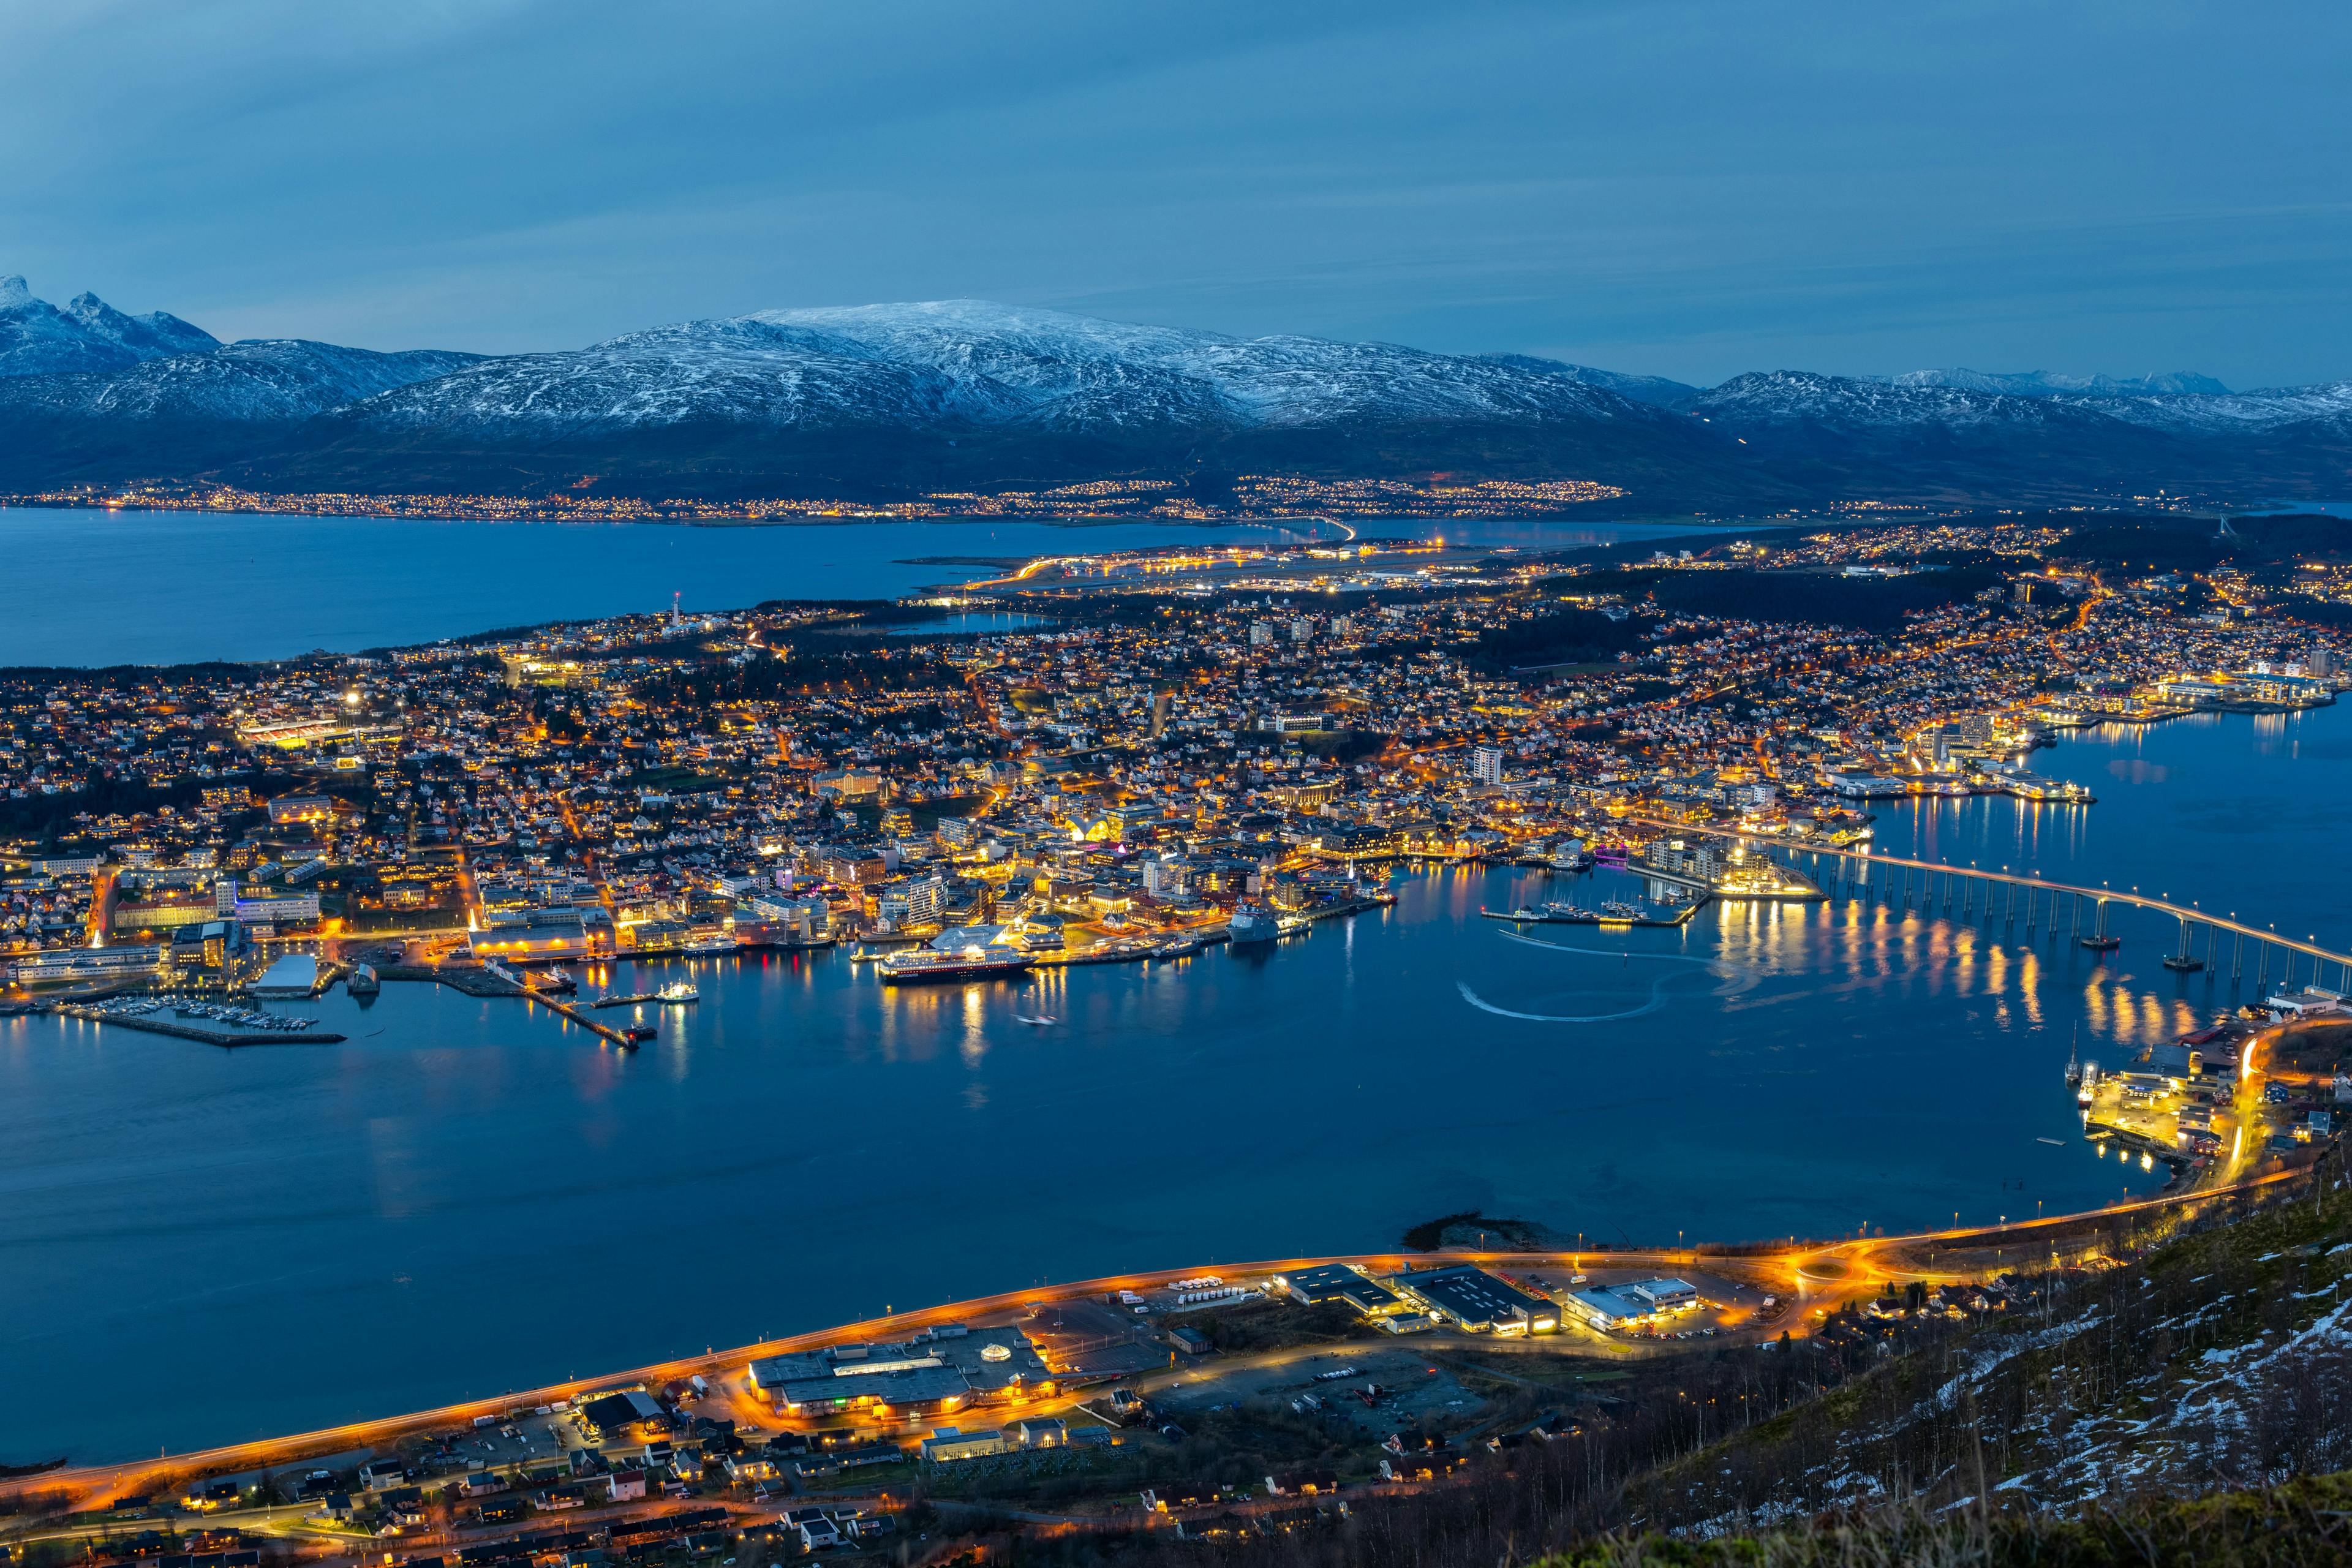 Tromsø, Norway at night from Fløya mountain.